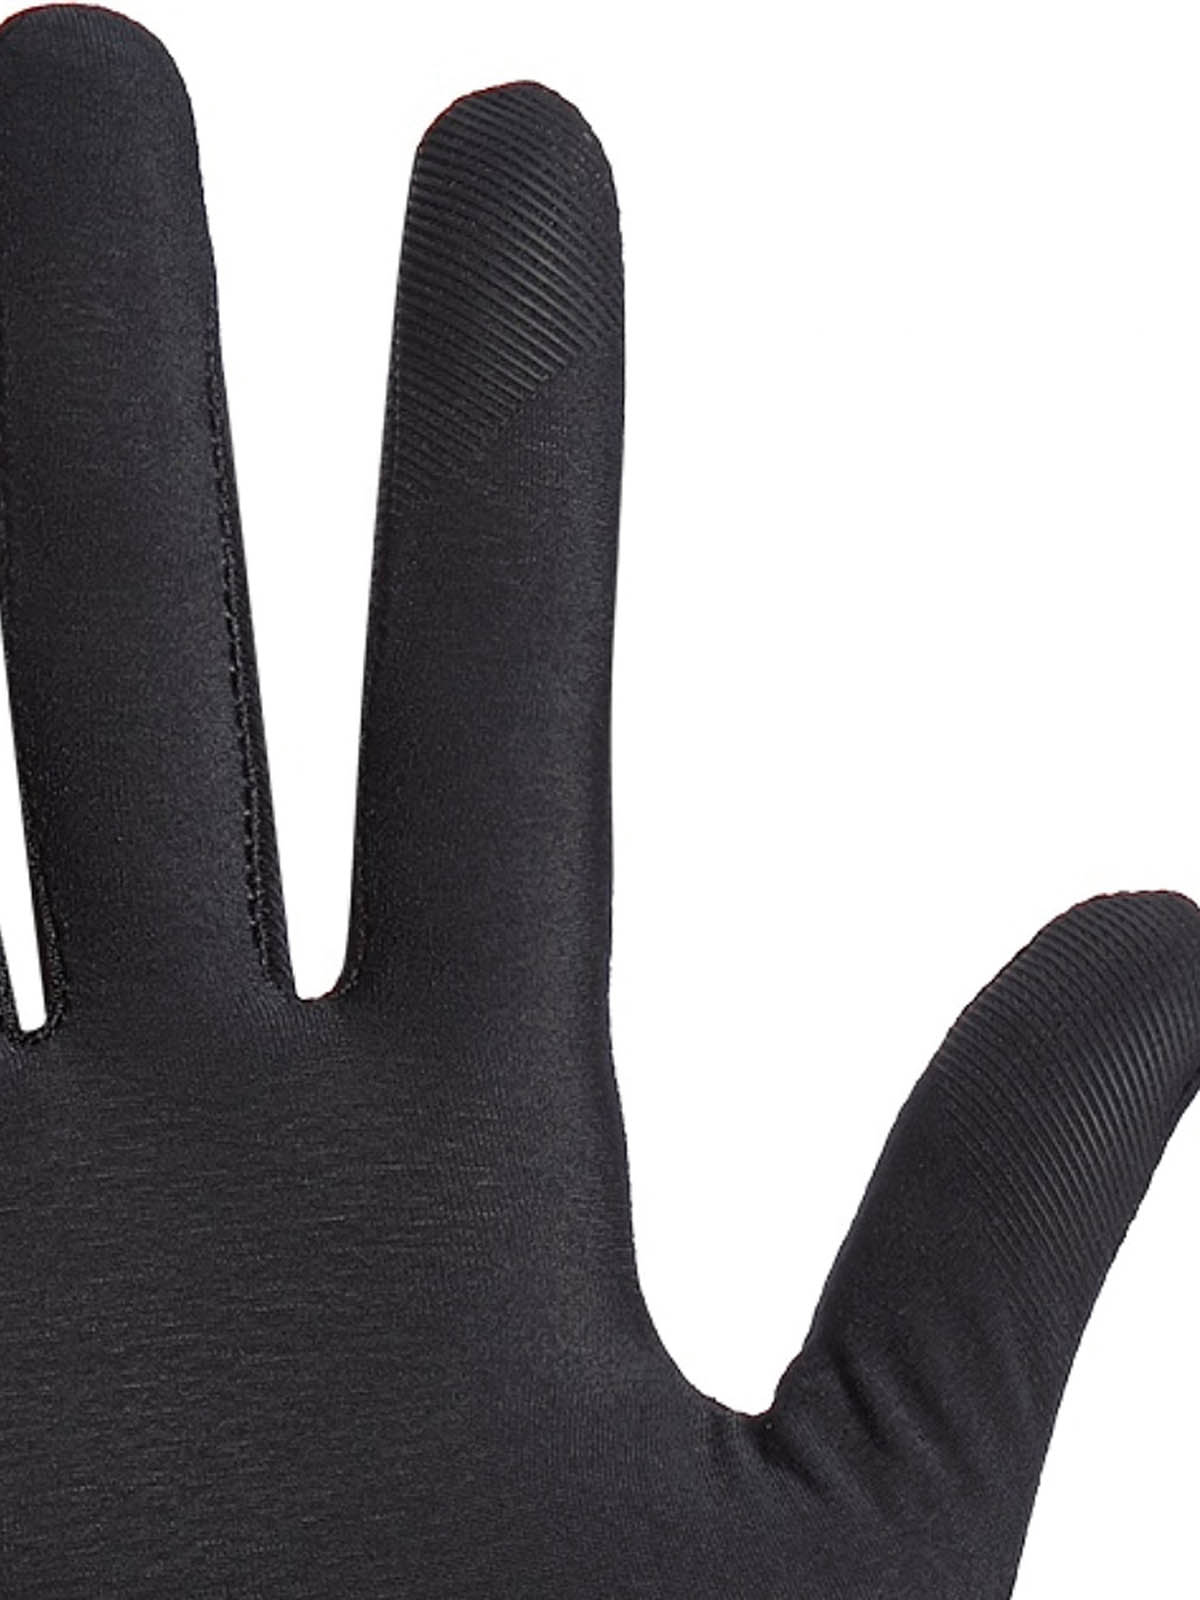 Guanti Unisex Nike - Dri-Fit Lightweight Gloves - Nero